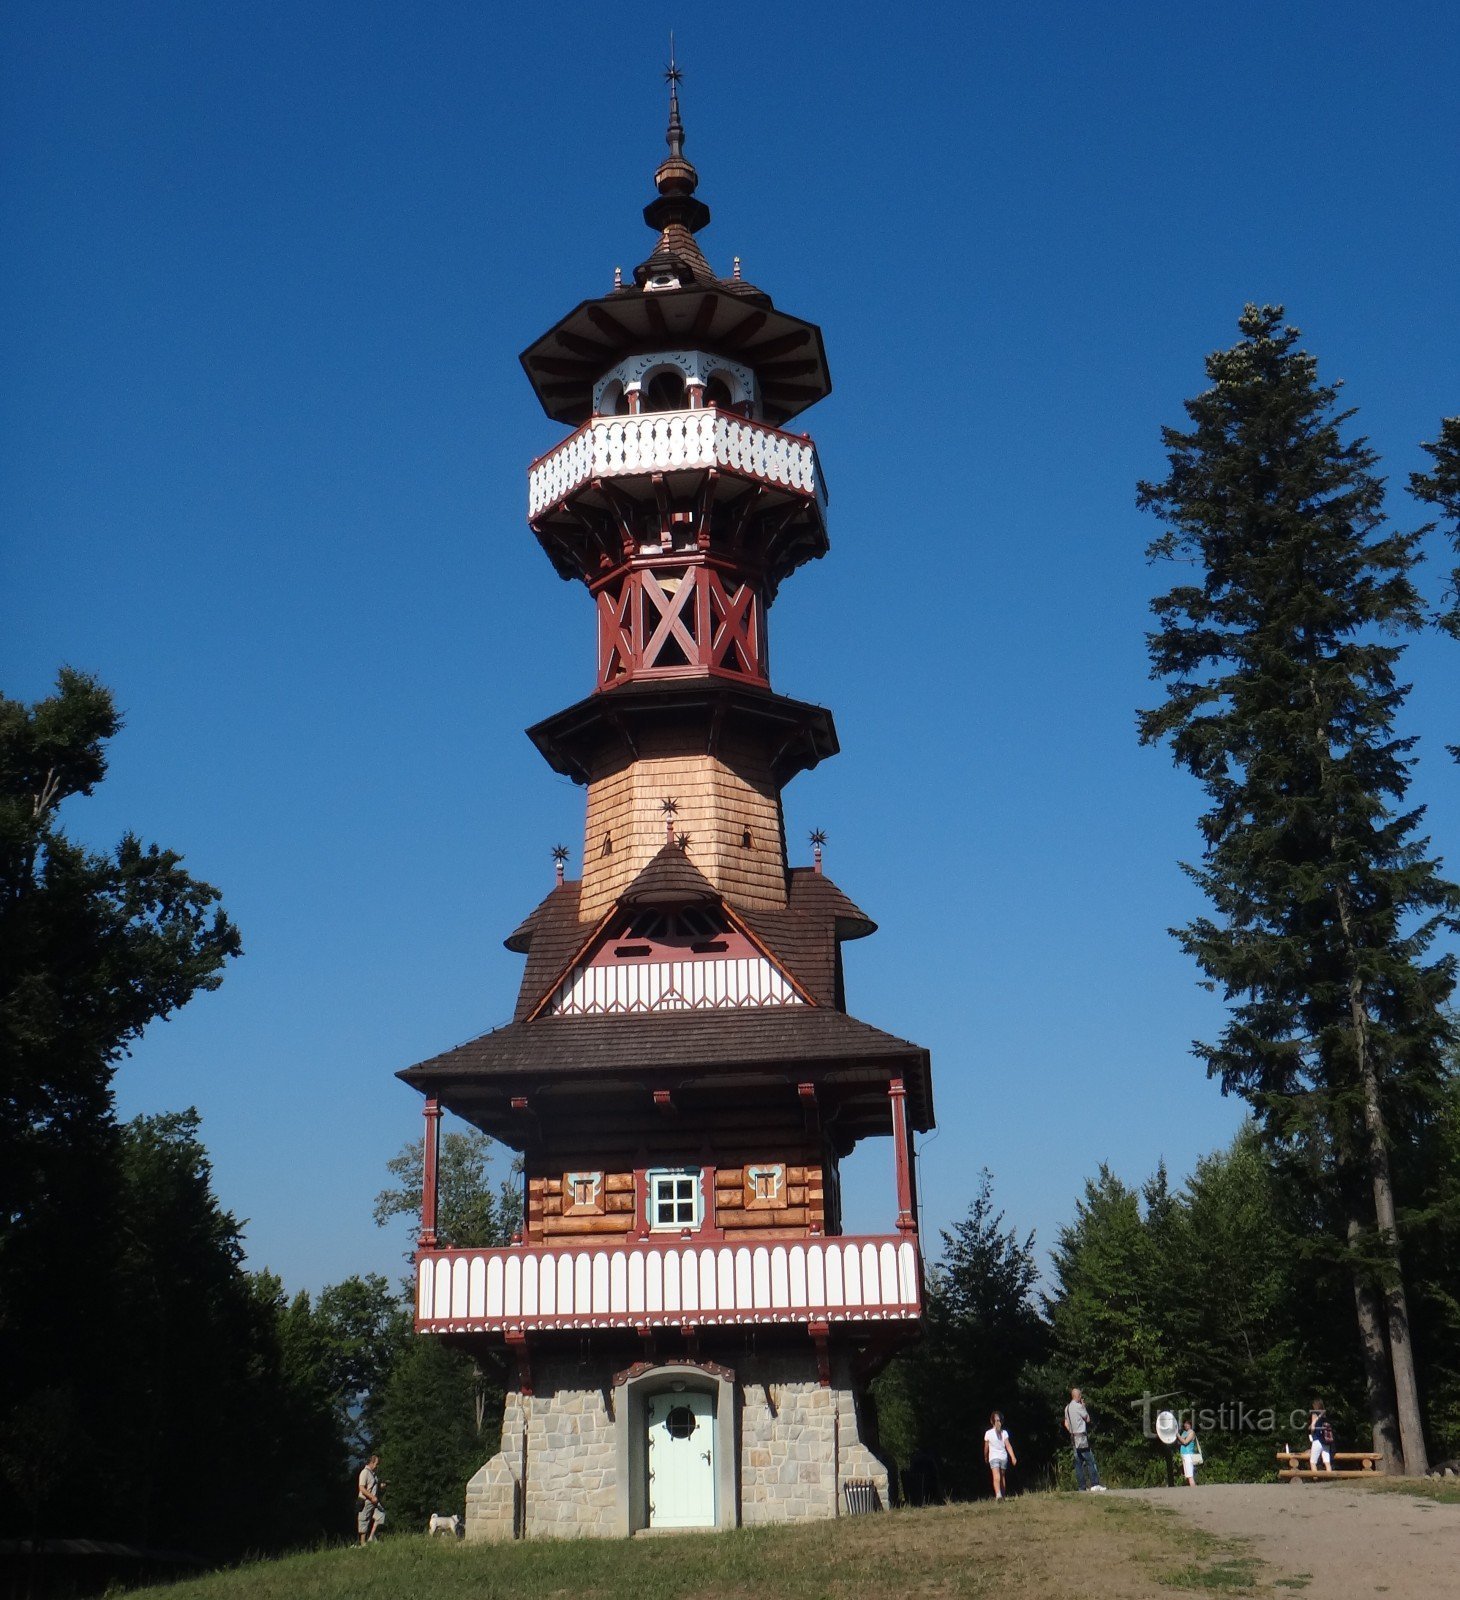 Jurkovič uitkijktoren